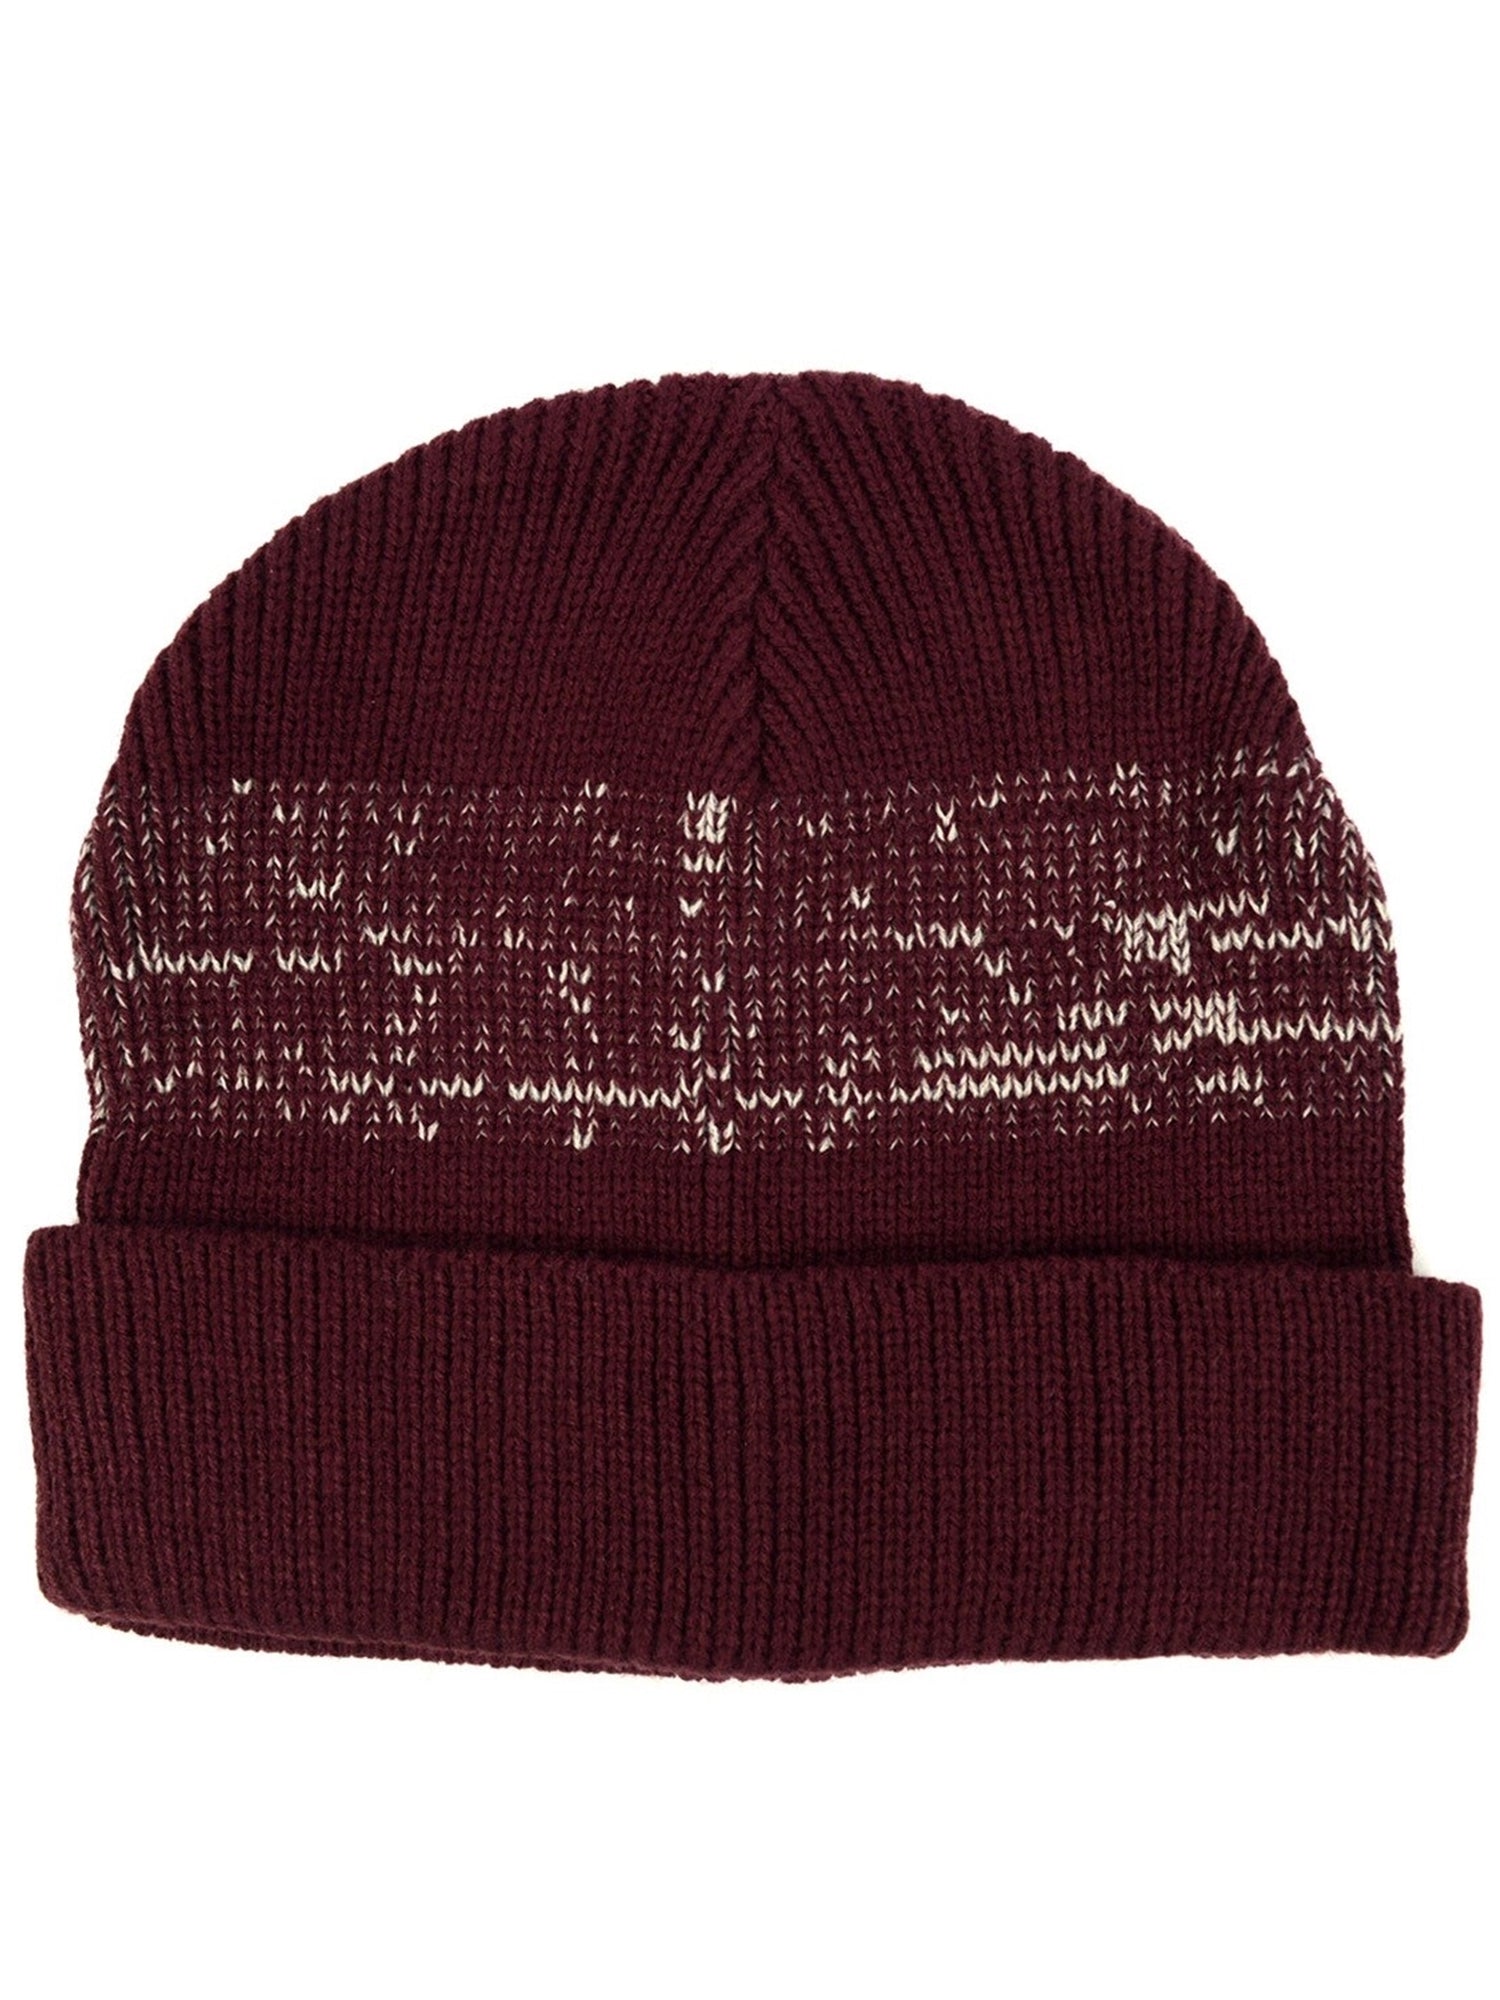 Men's Acrylic Knit Scarf and Hat Set Winter Set Umo Lorenzo   